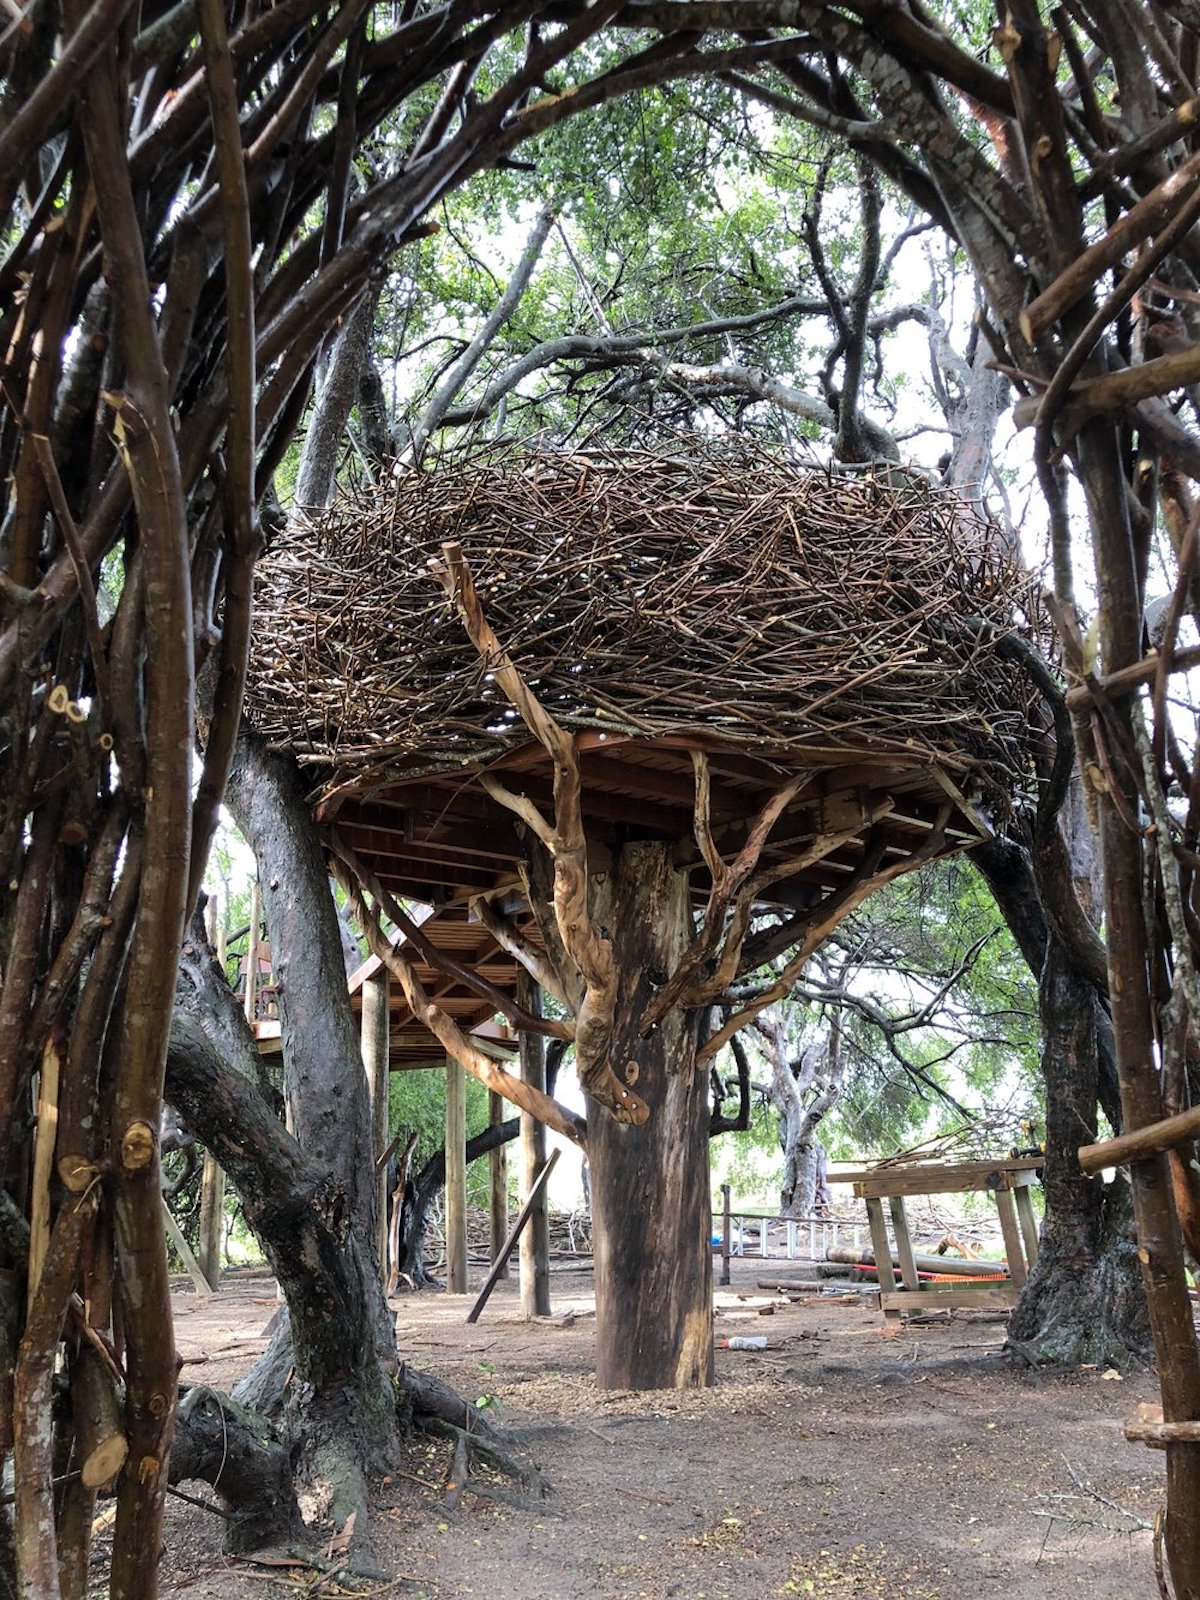 Giant Nest Sculptures by Charlie Baker